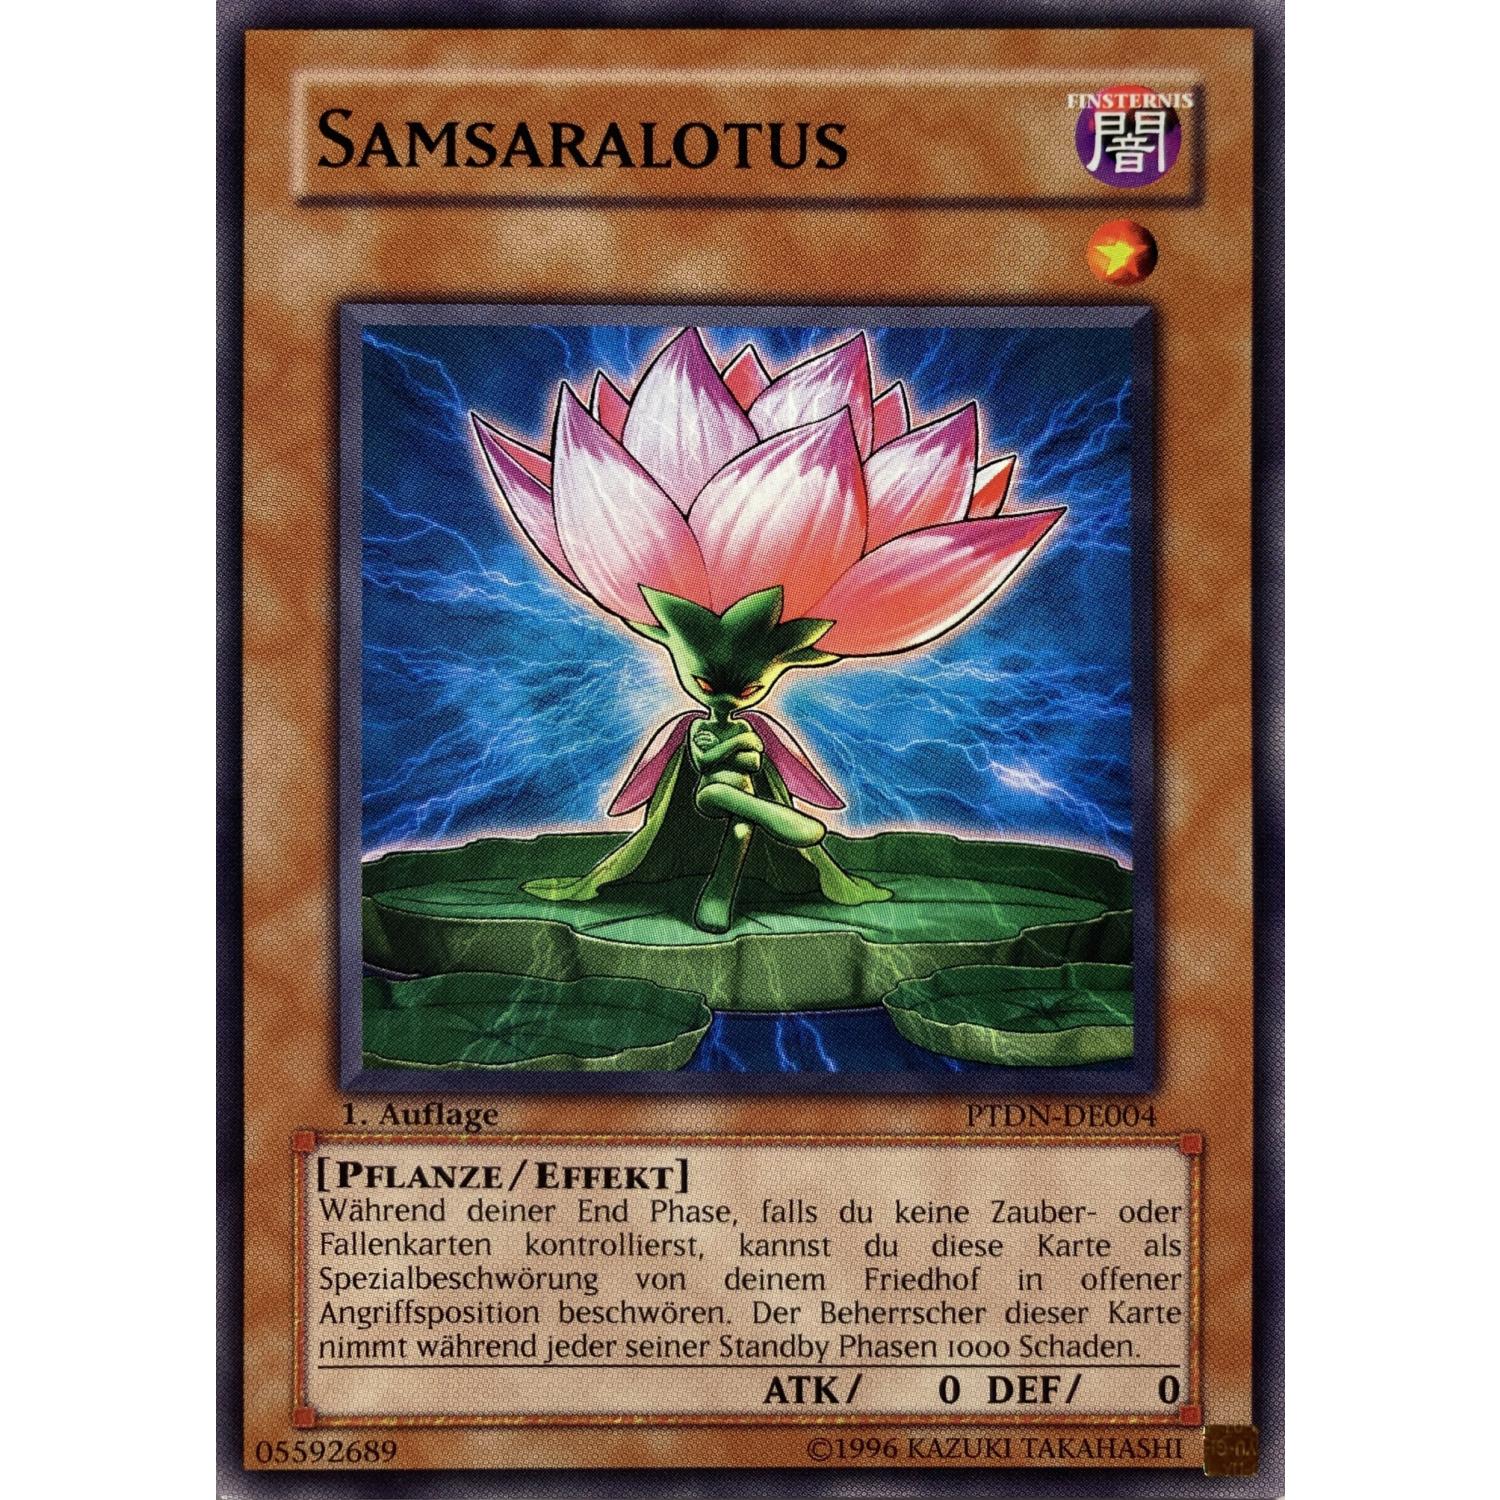 Samsaralotus 1. Auflage PTDN-DE004 Common